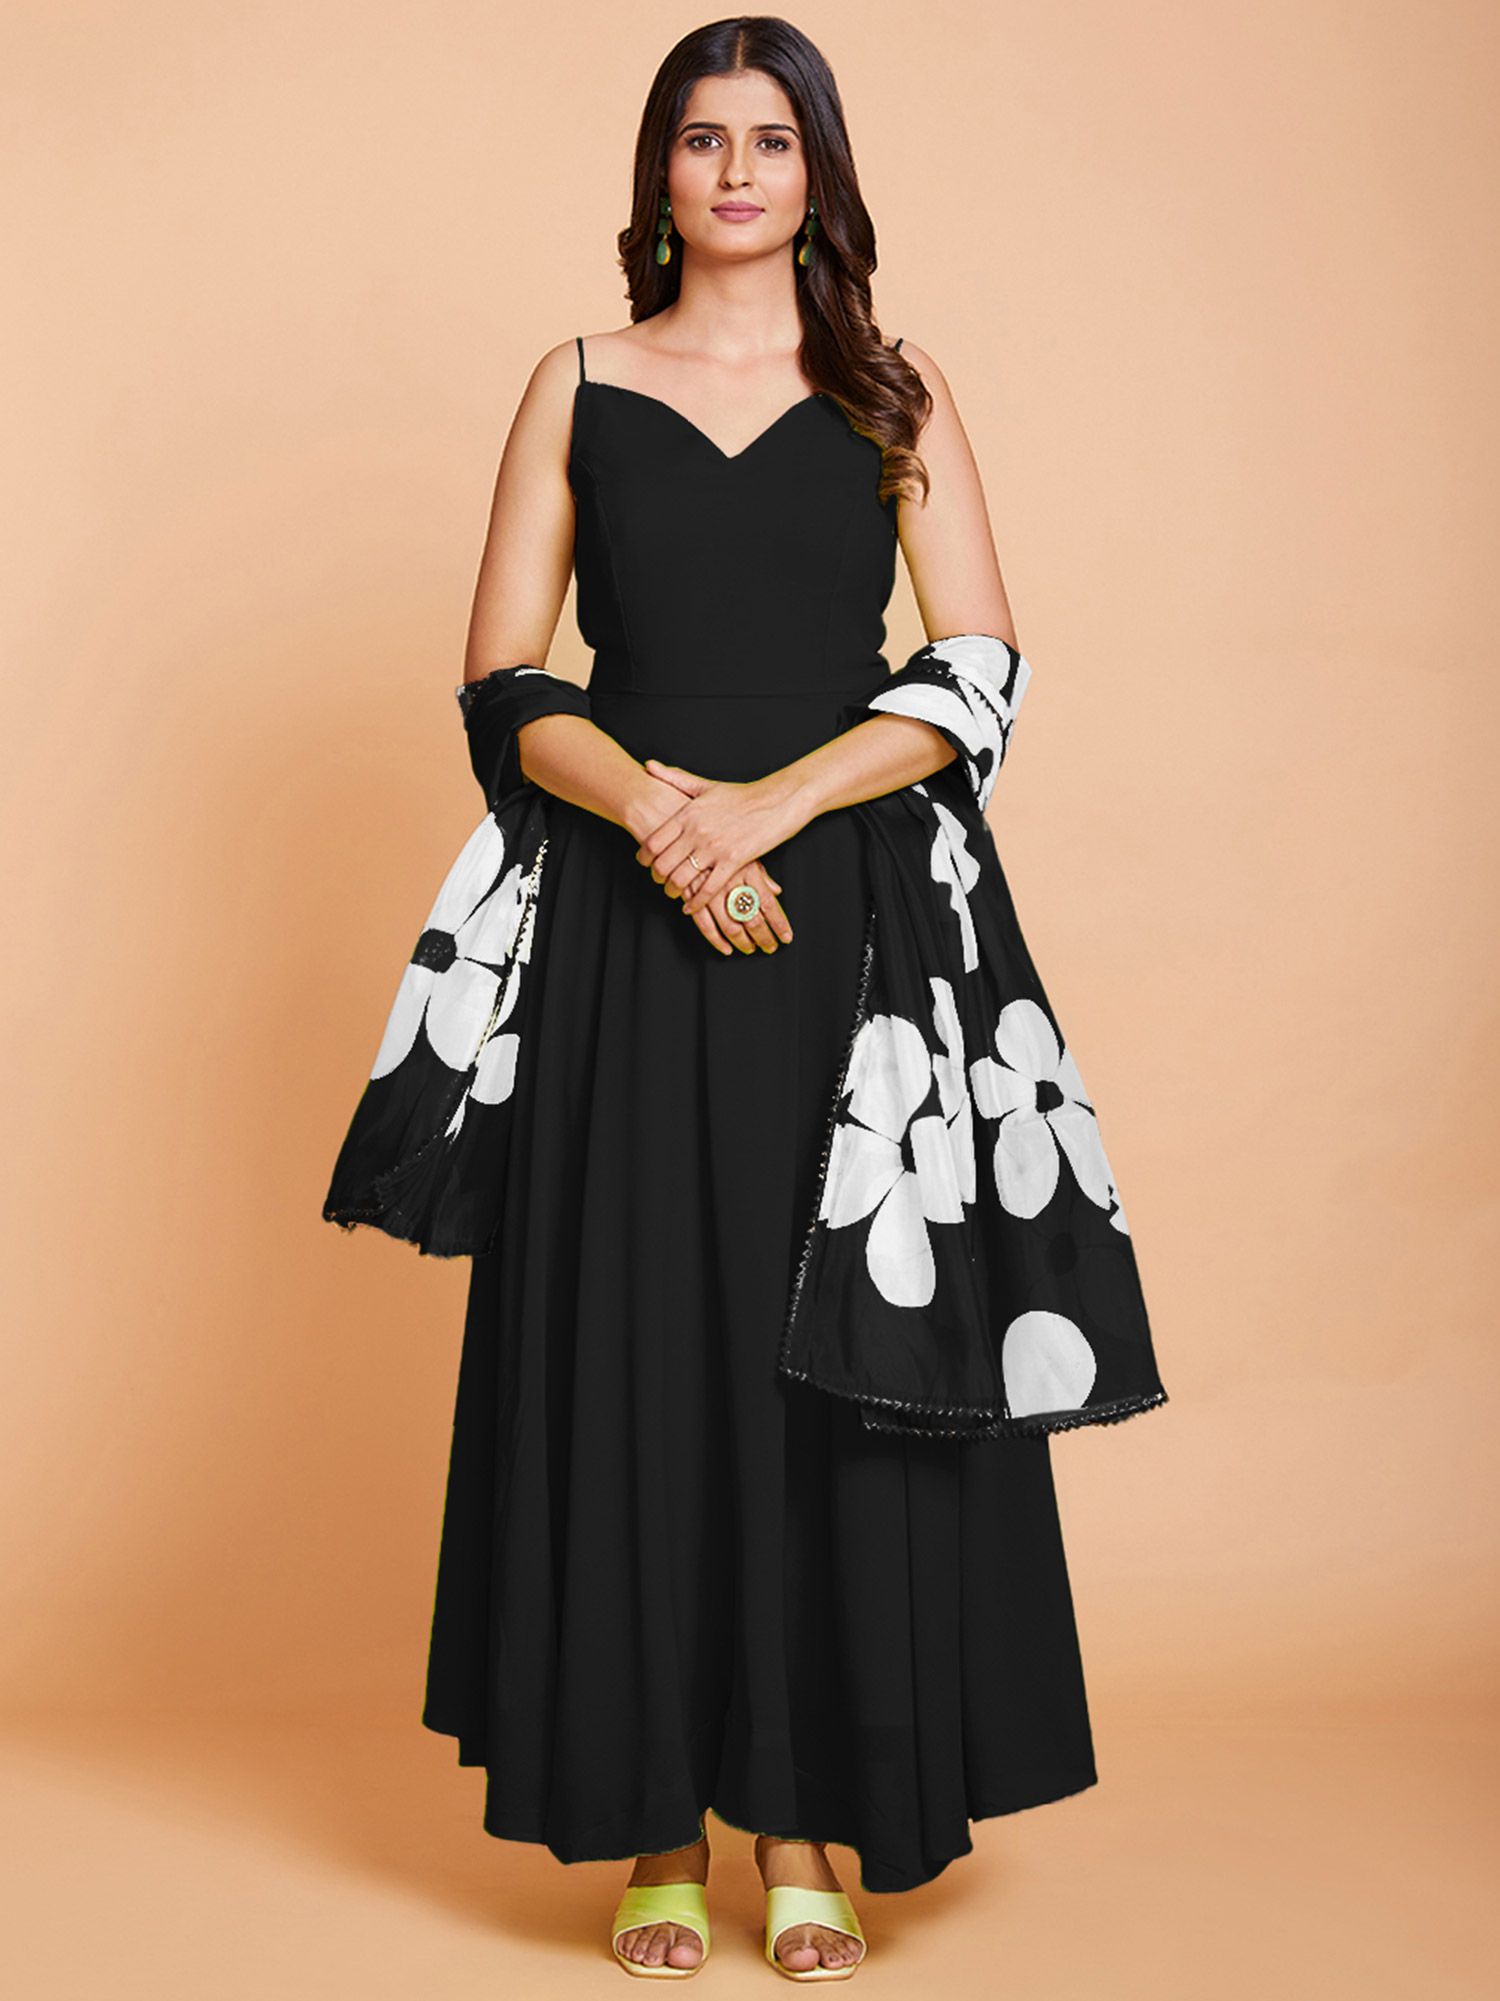 Women's mroon floral printed georgette long western dress - vidraa western  store - 4221325